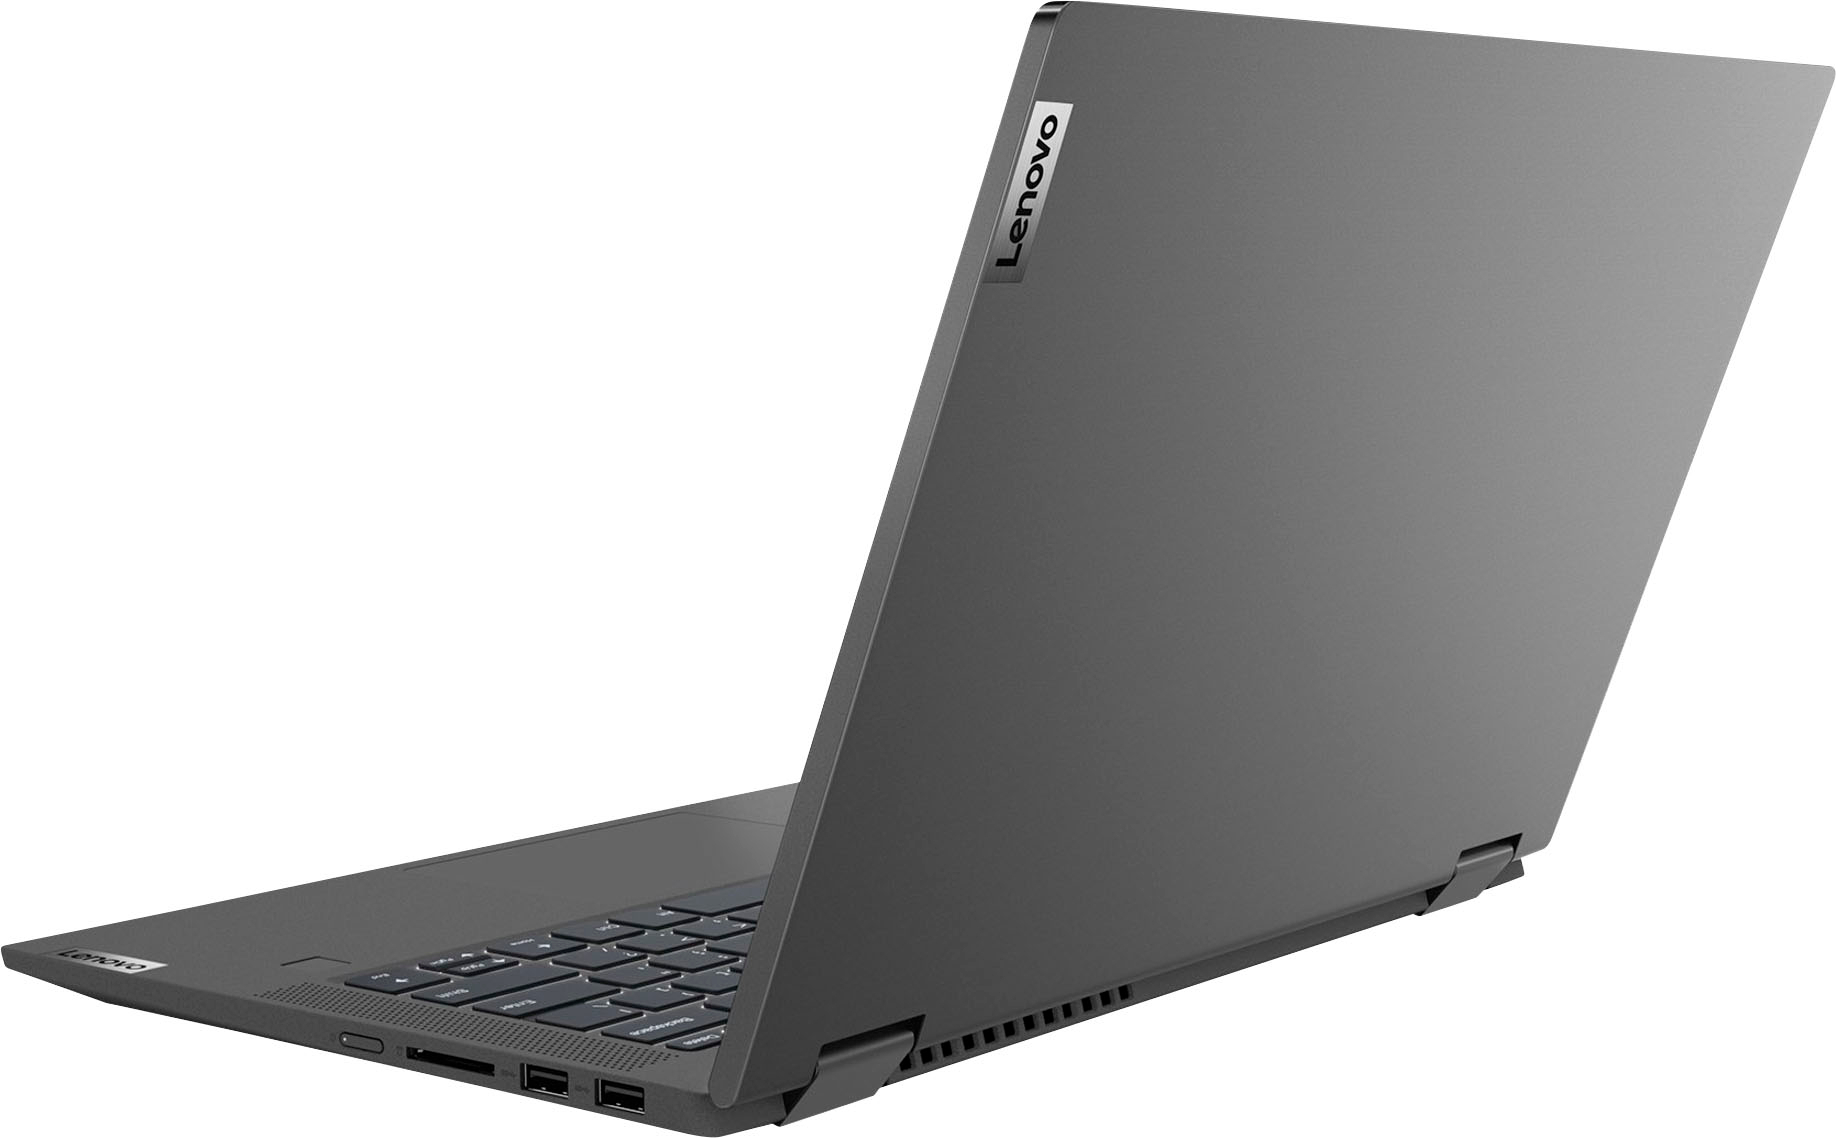 Angle View: Lenovo - Geek Squad Certified Refurbished L340-15API 15.6" Laptop - AMD Ryzen 3 - 8GB Memory - 1TB HDD - Platinum Gray